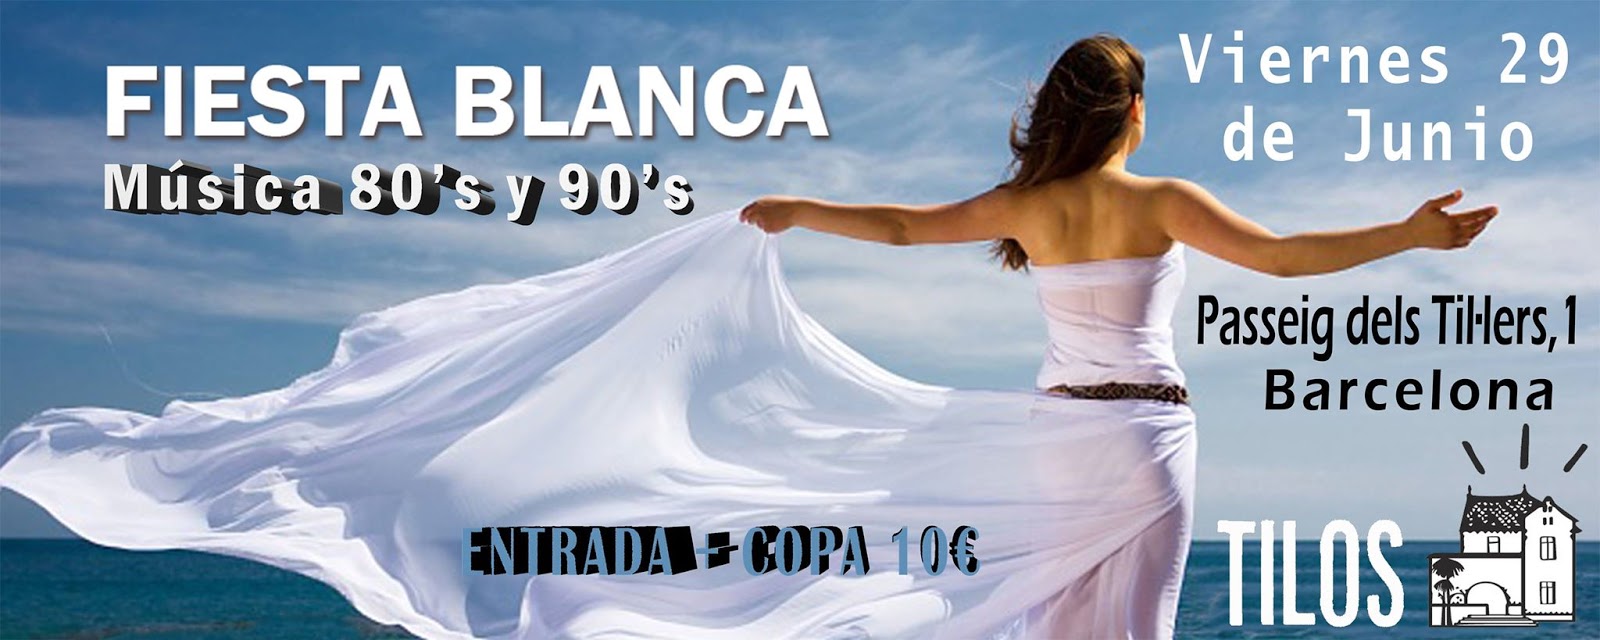 Flyer Fiesta Blanca 80s y 90s